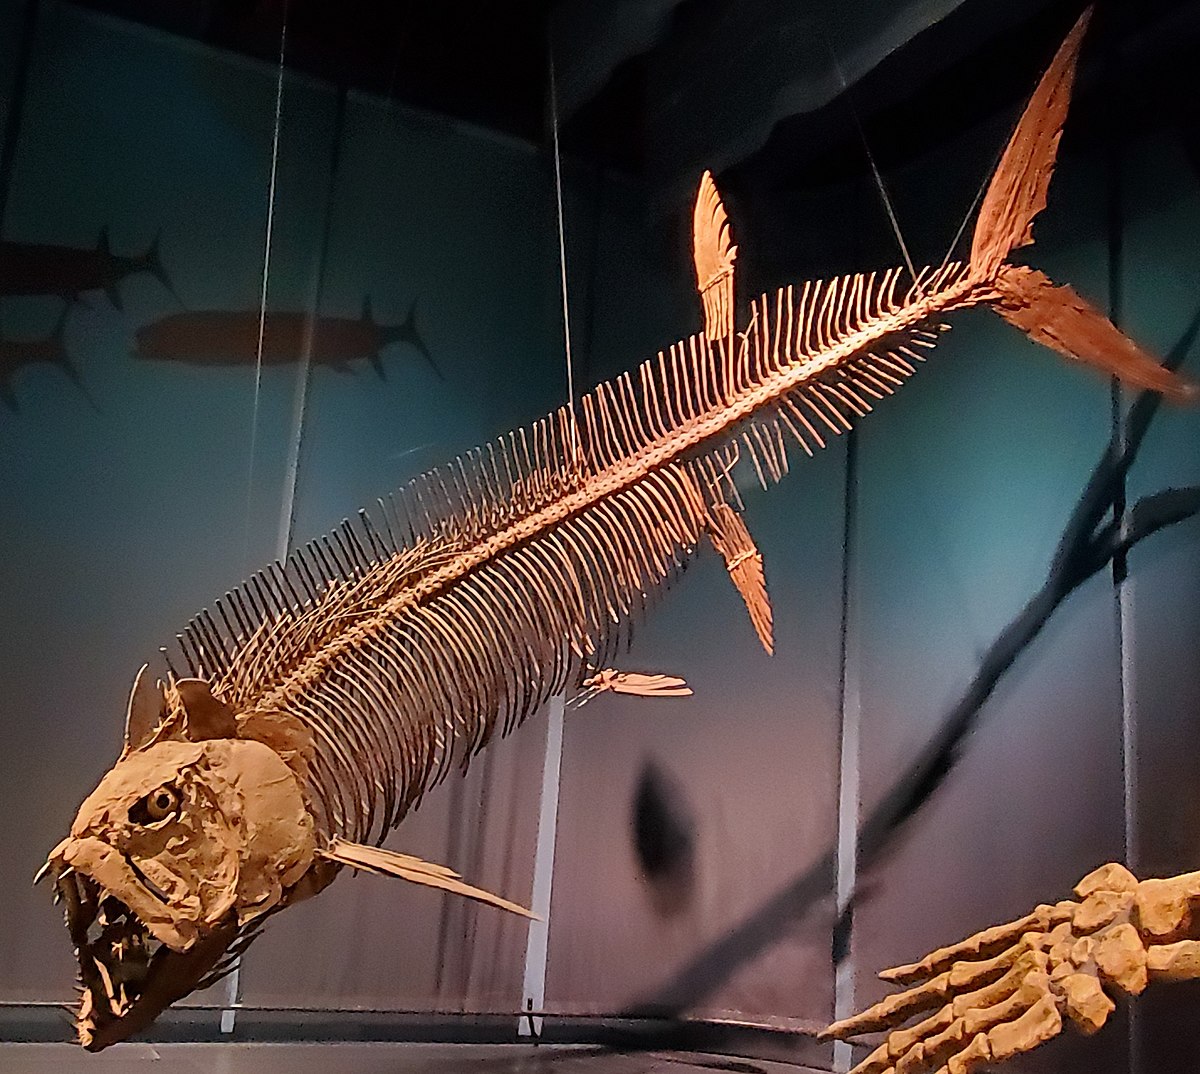 ancient fish fossils